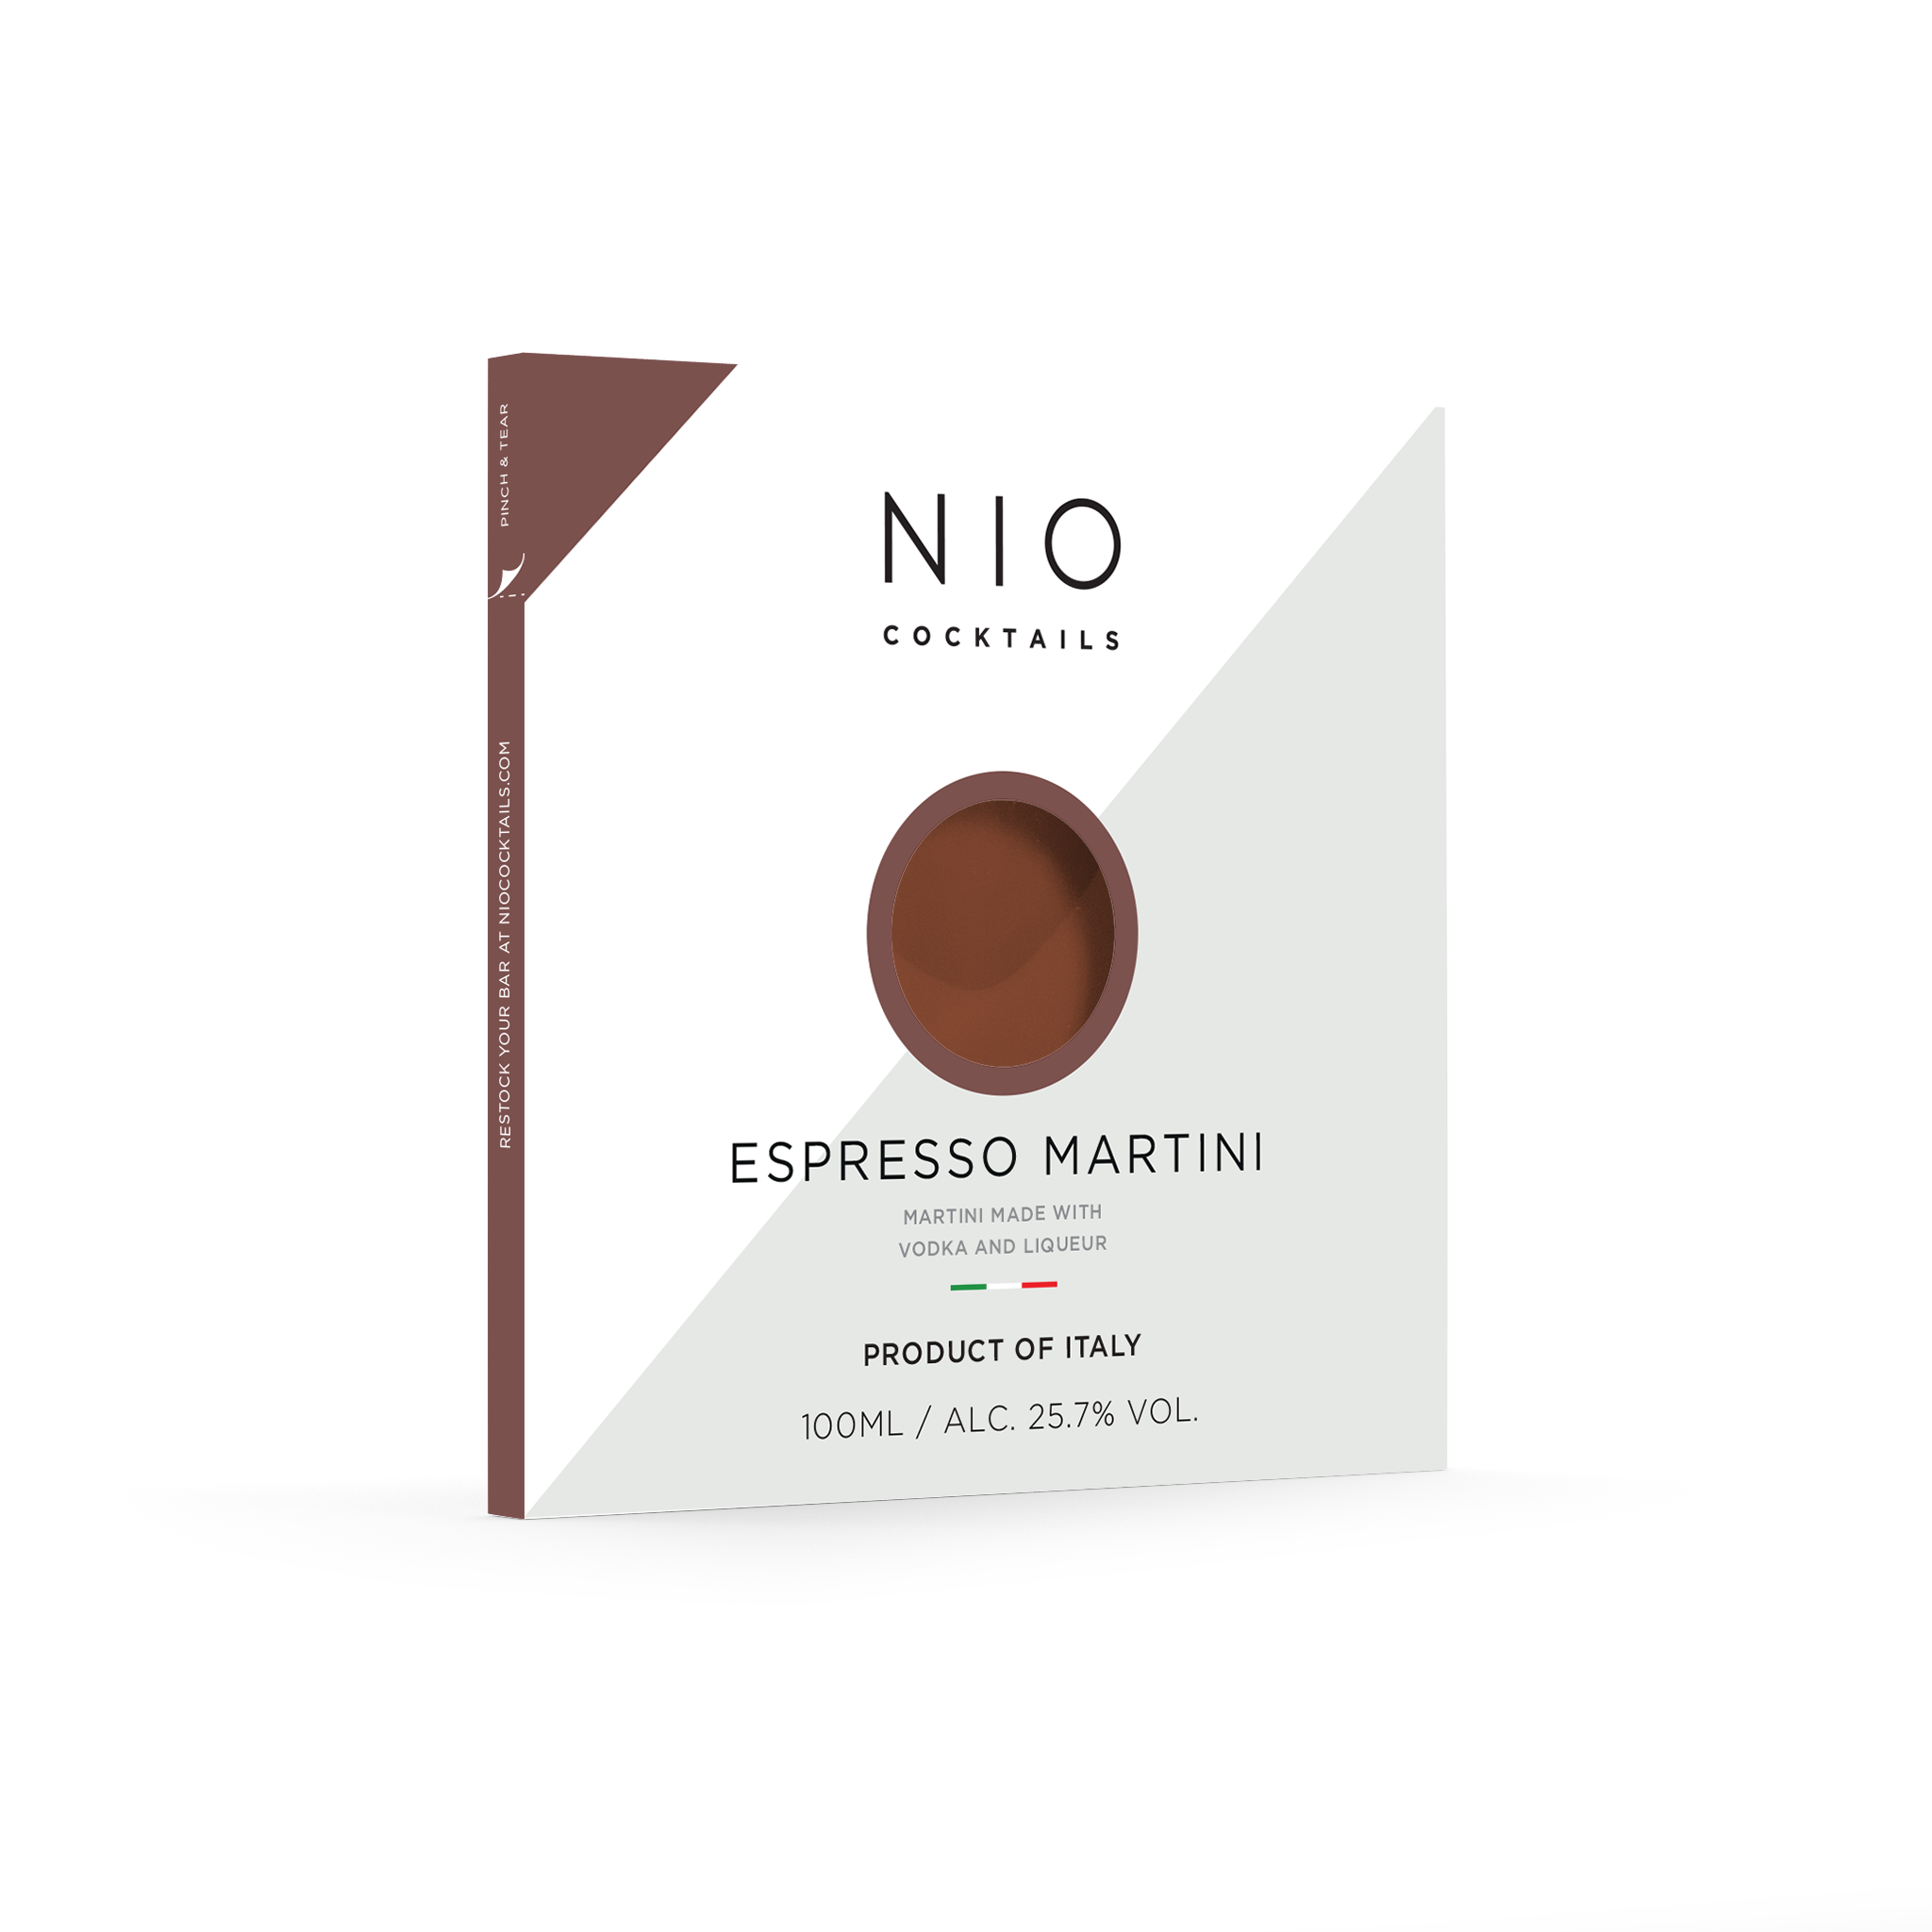 NIO Cocktails Espresso Martini Cocktail 100g